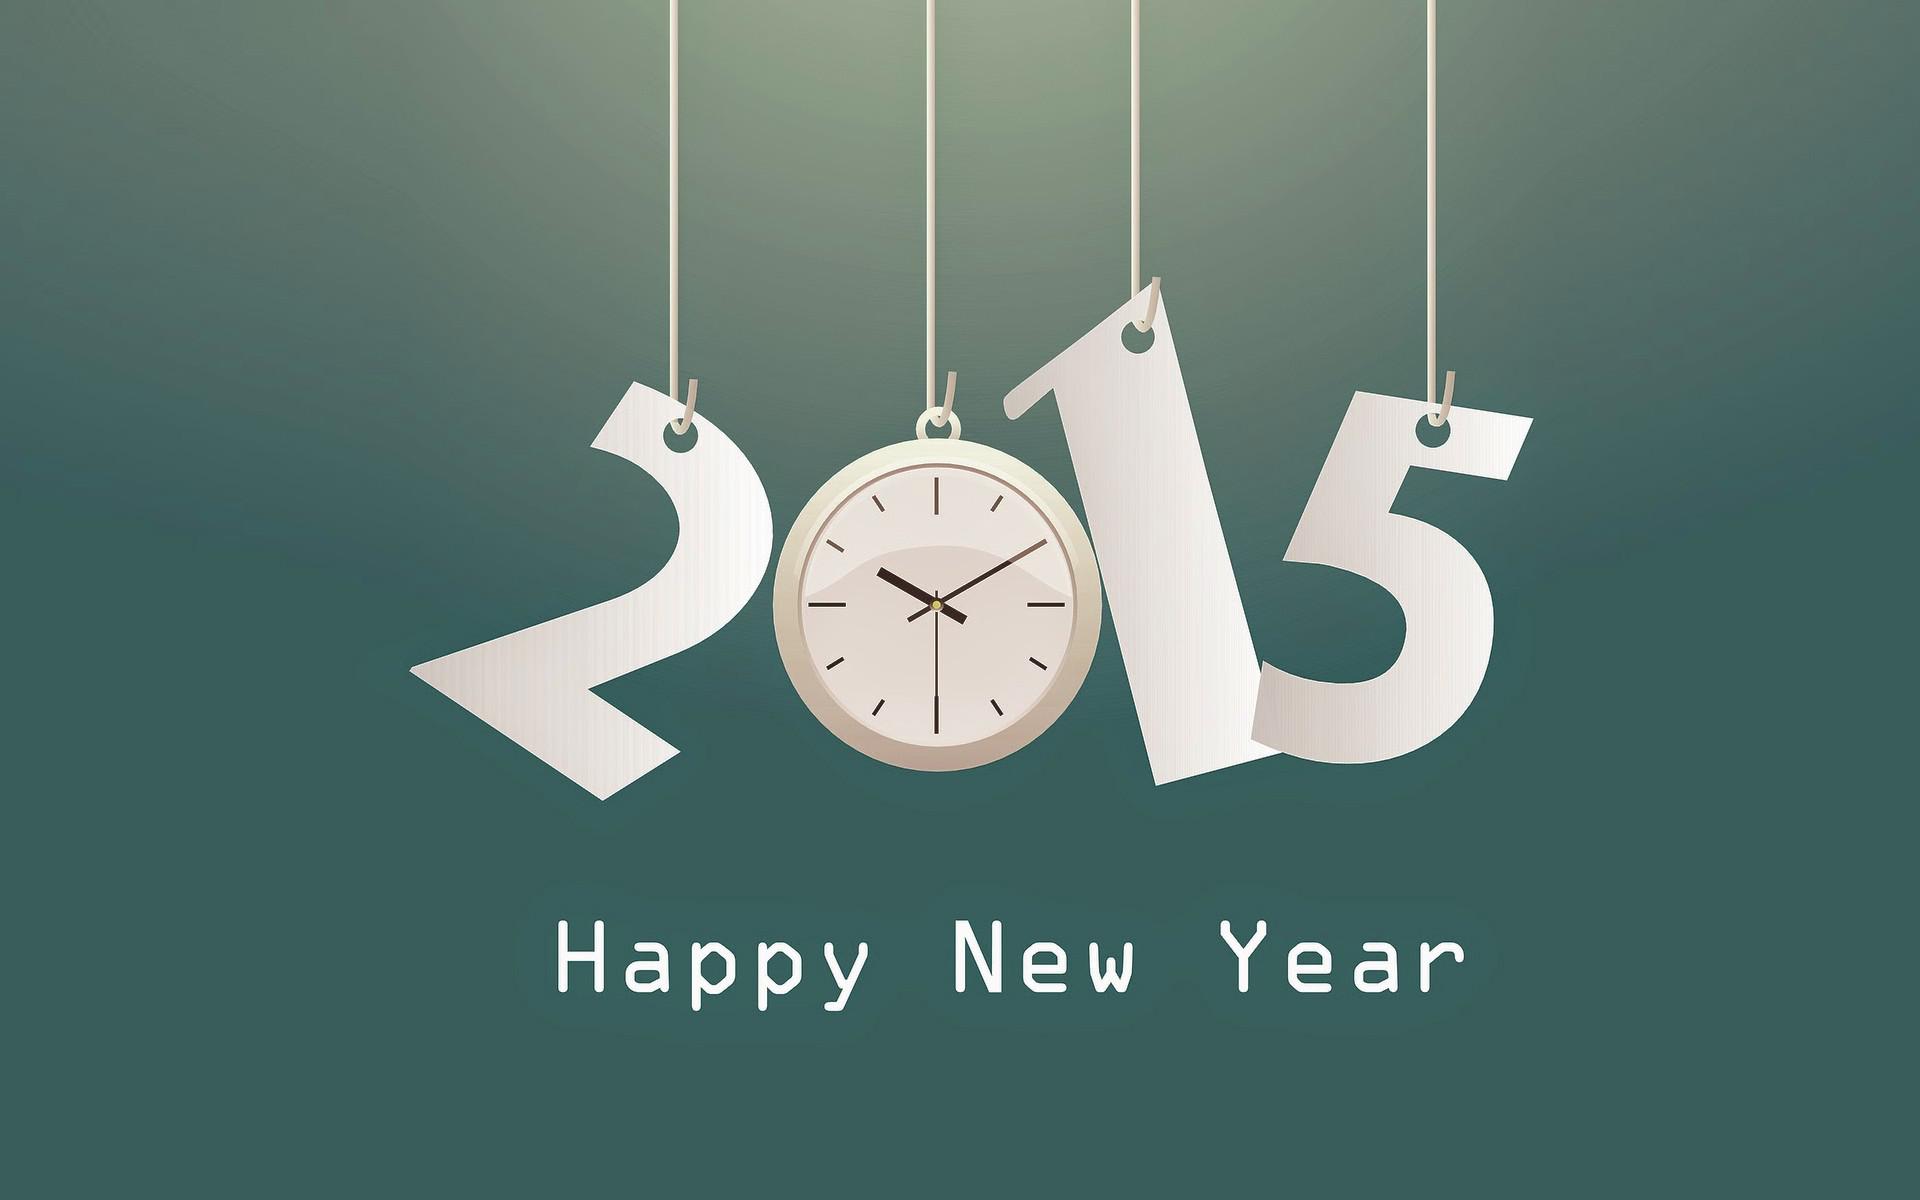 صور خلفيات وبطاقات هابي نيو يير 2015 , happy new year 2015 hd